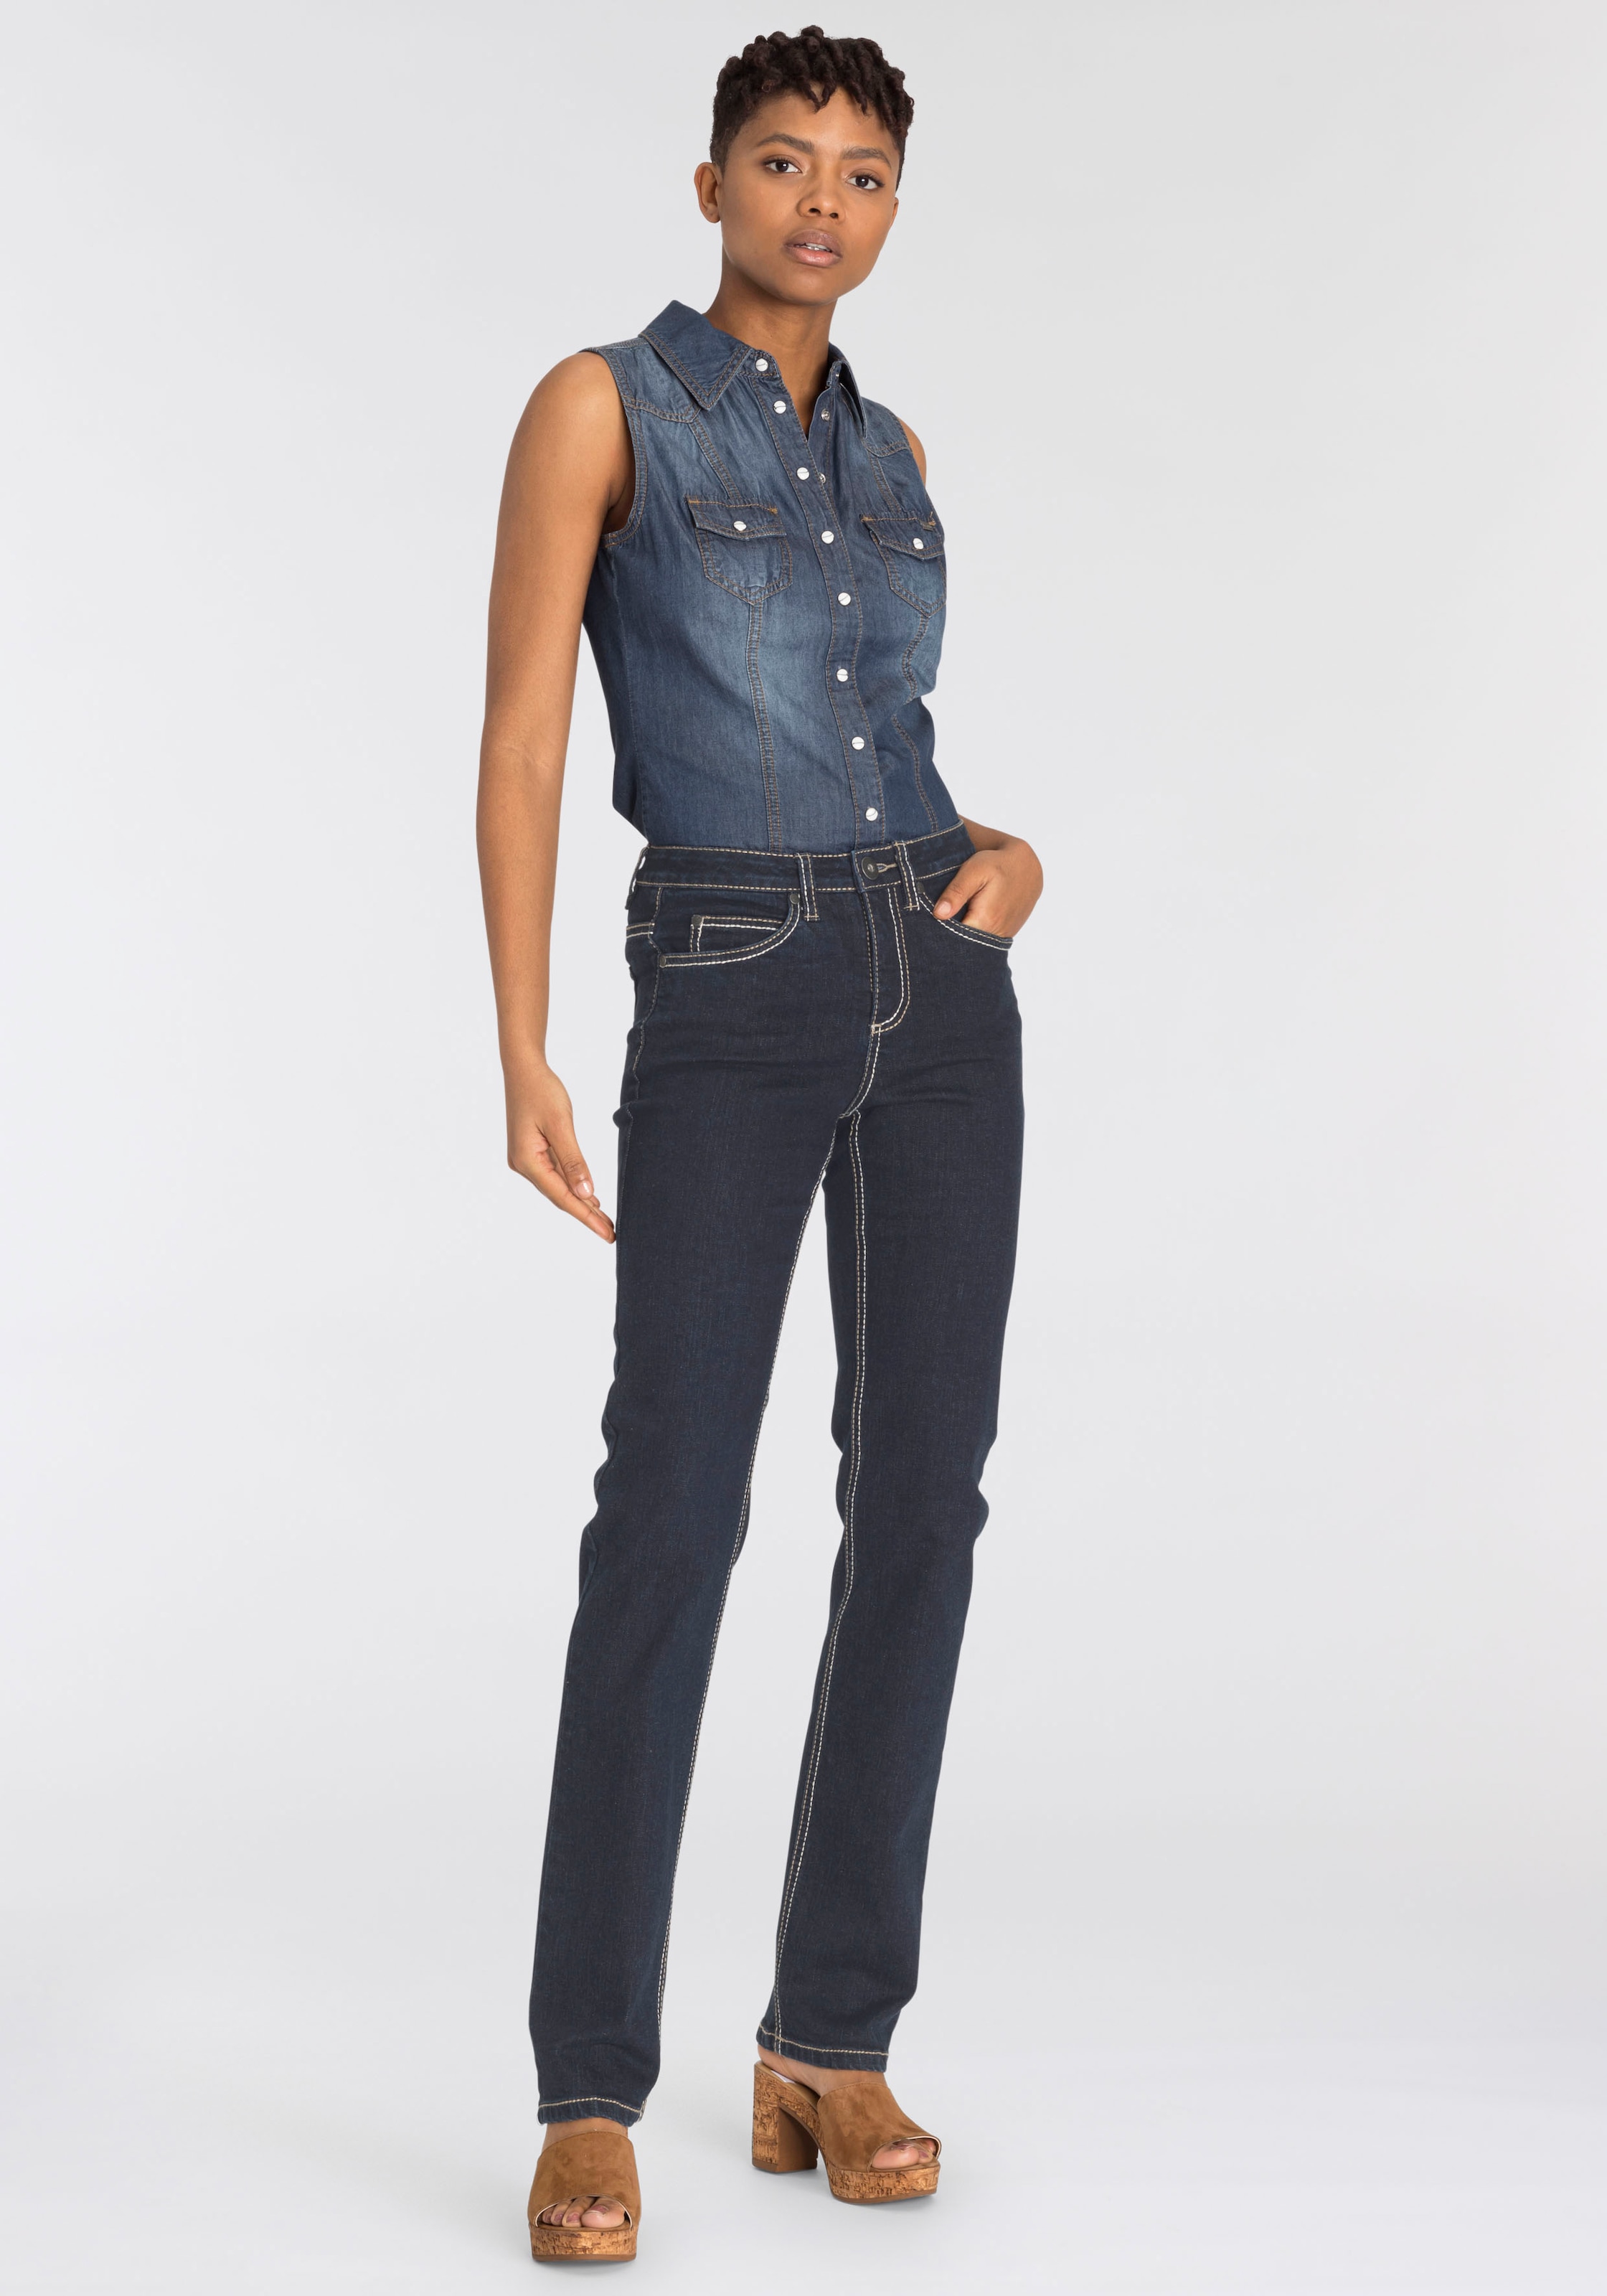 Arizona Gerade Jeans »Comfort-Fit«, High Waist mit Kontrastnähten bei ♕